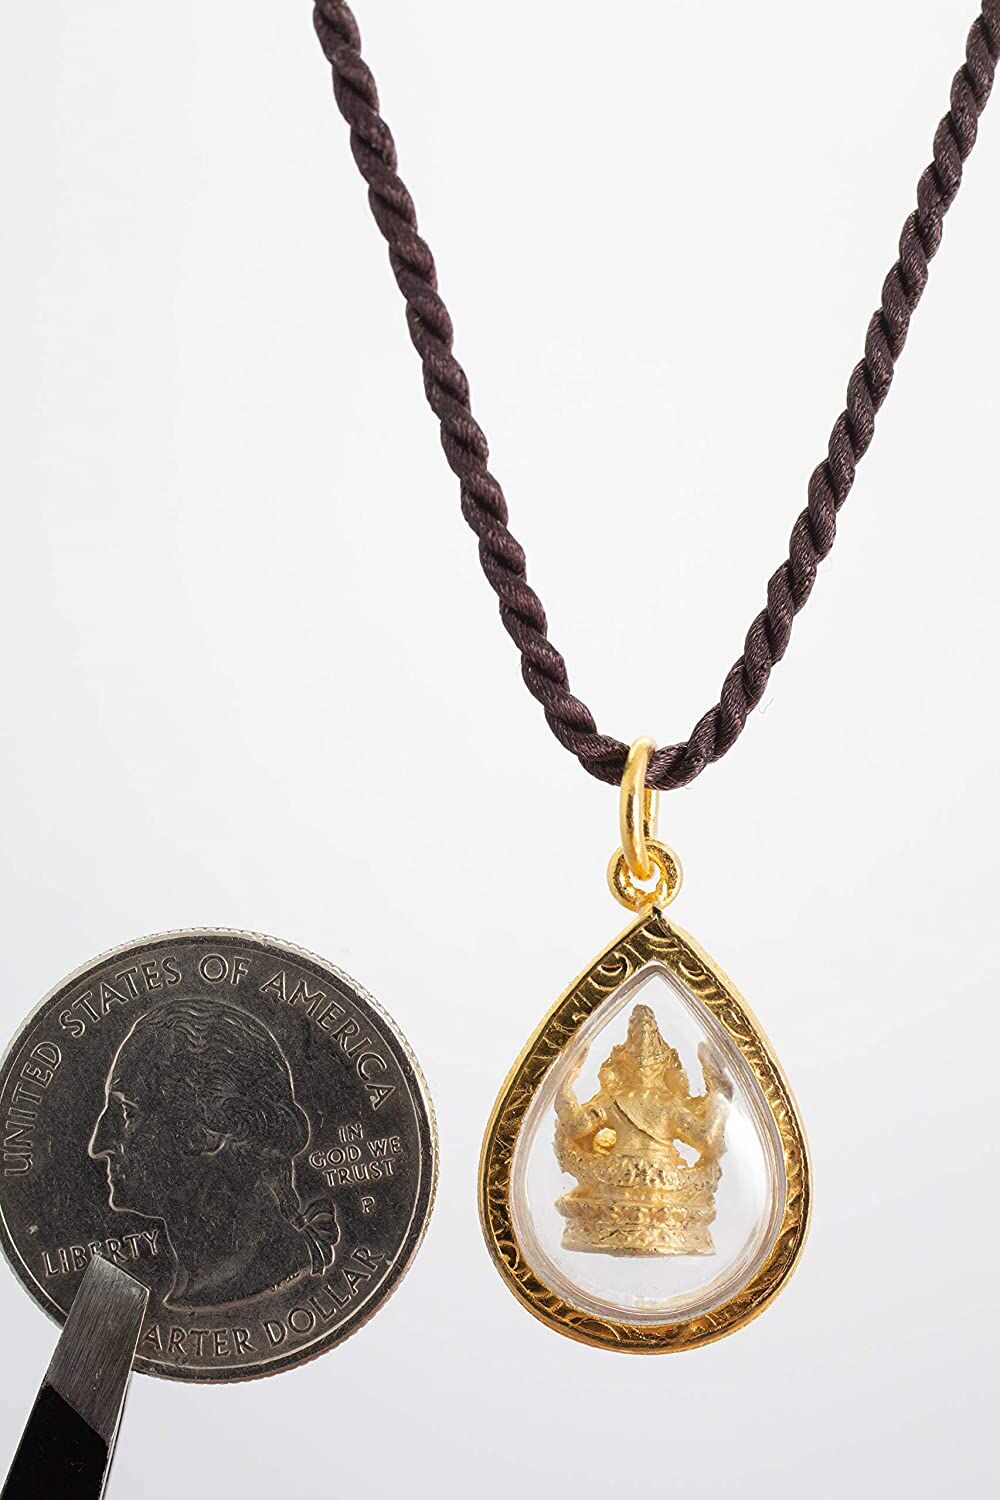 Artschatz - Golden Ganesh Ekadanta Ganapati - Amulet Hindu Pendant